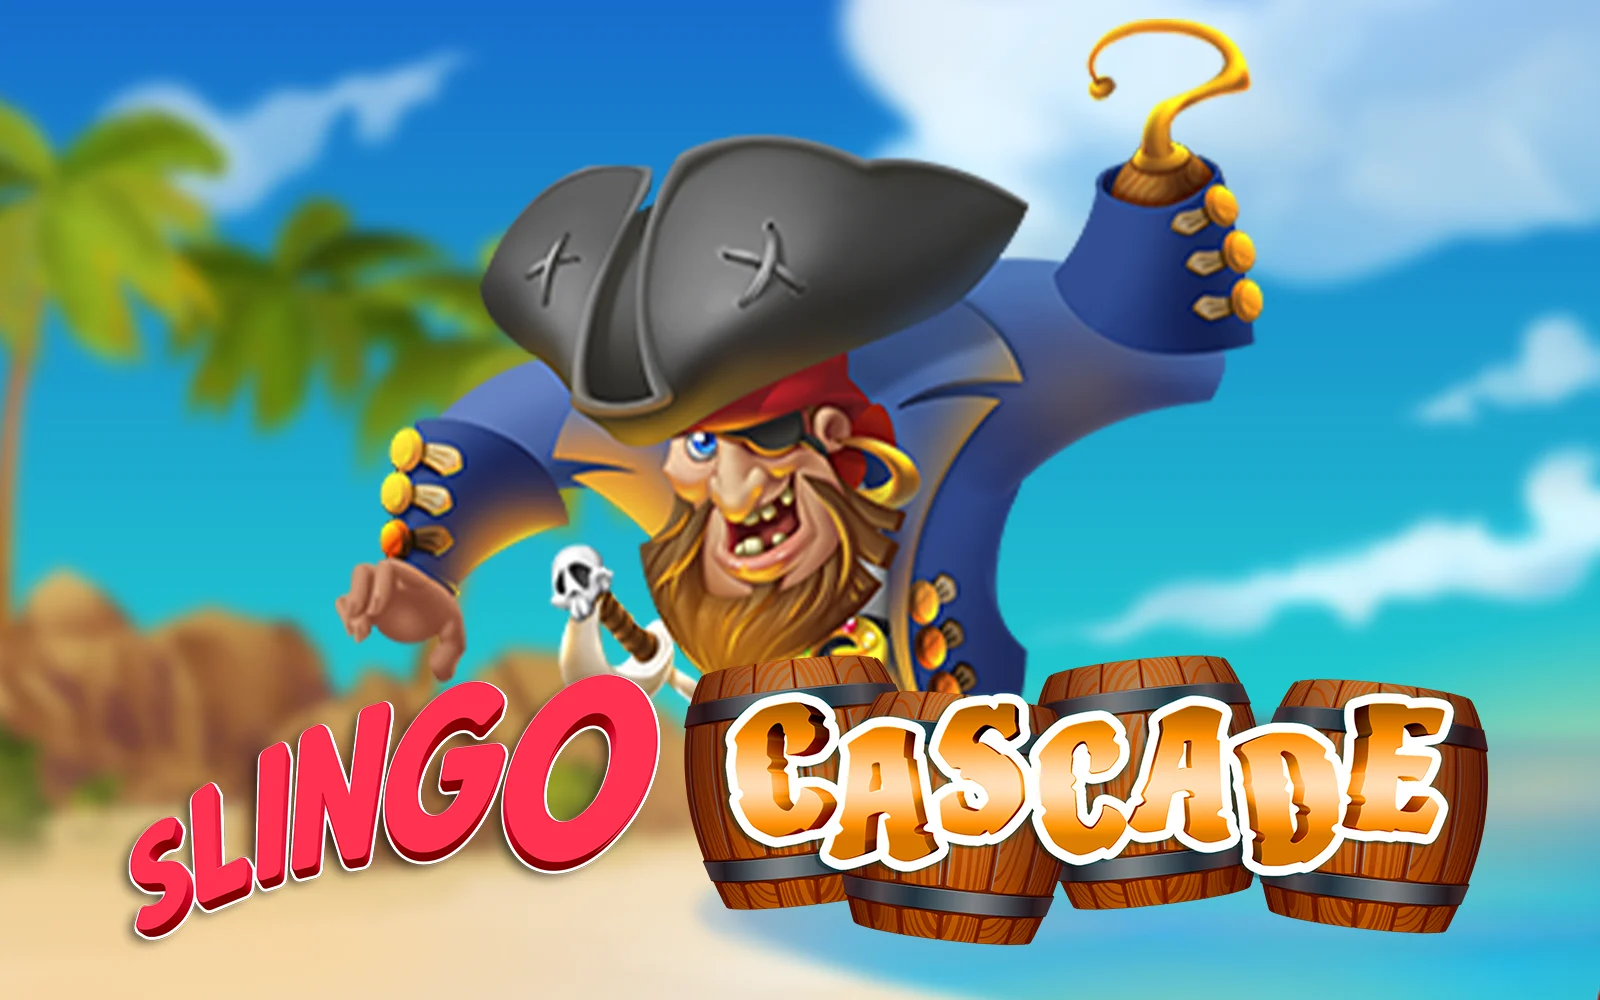 Speel Slingo Cascade op Starcasino.be online casino